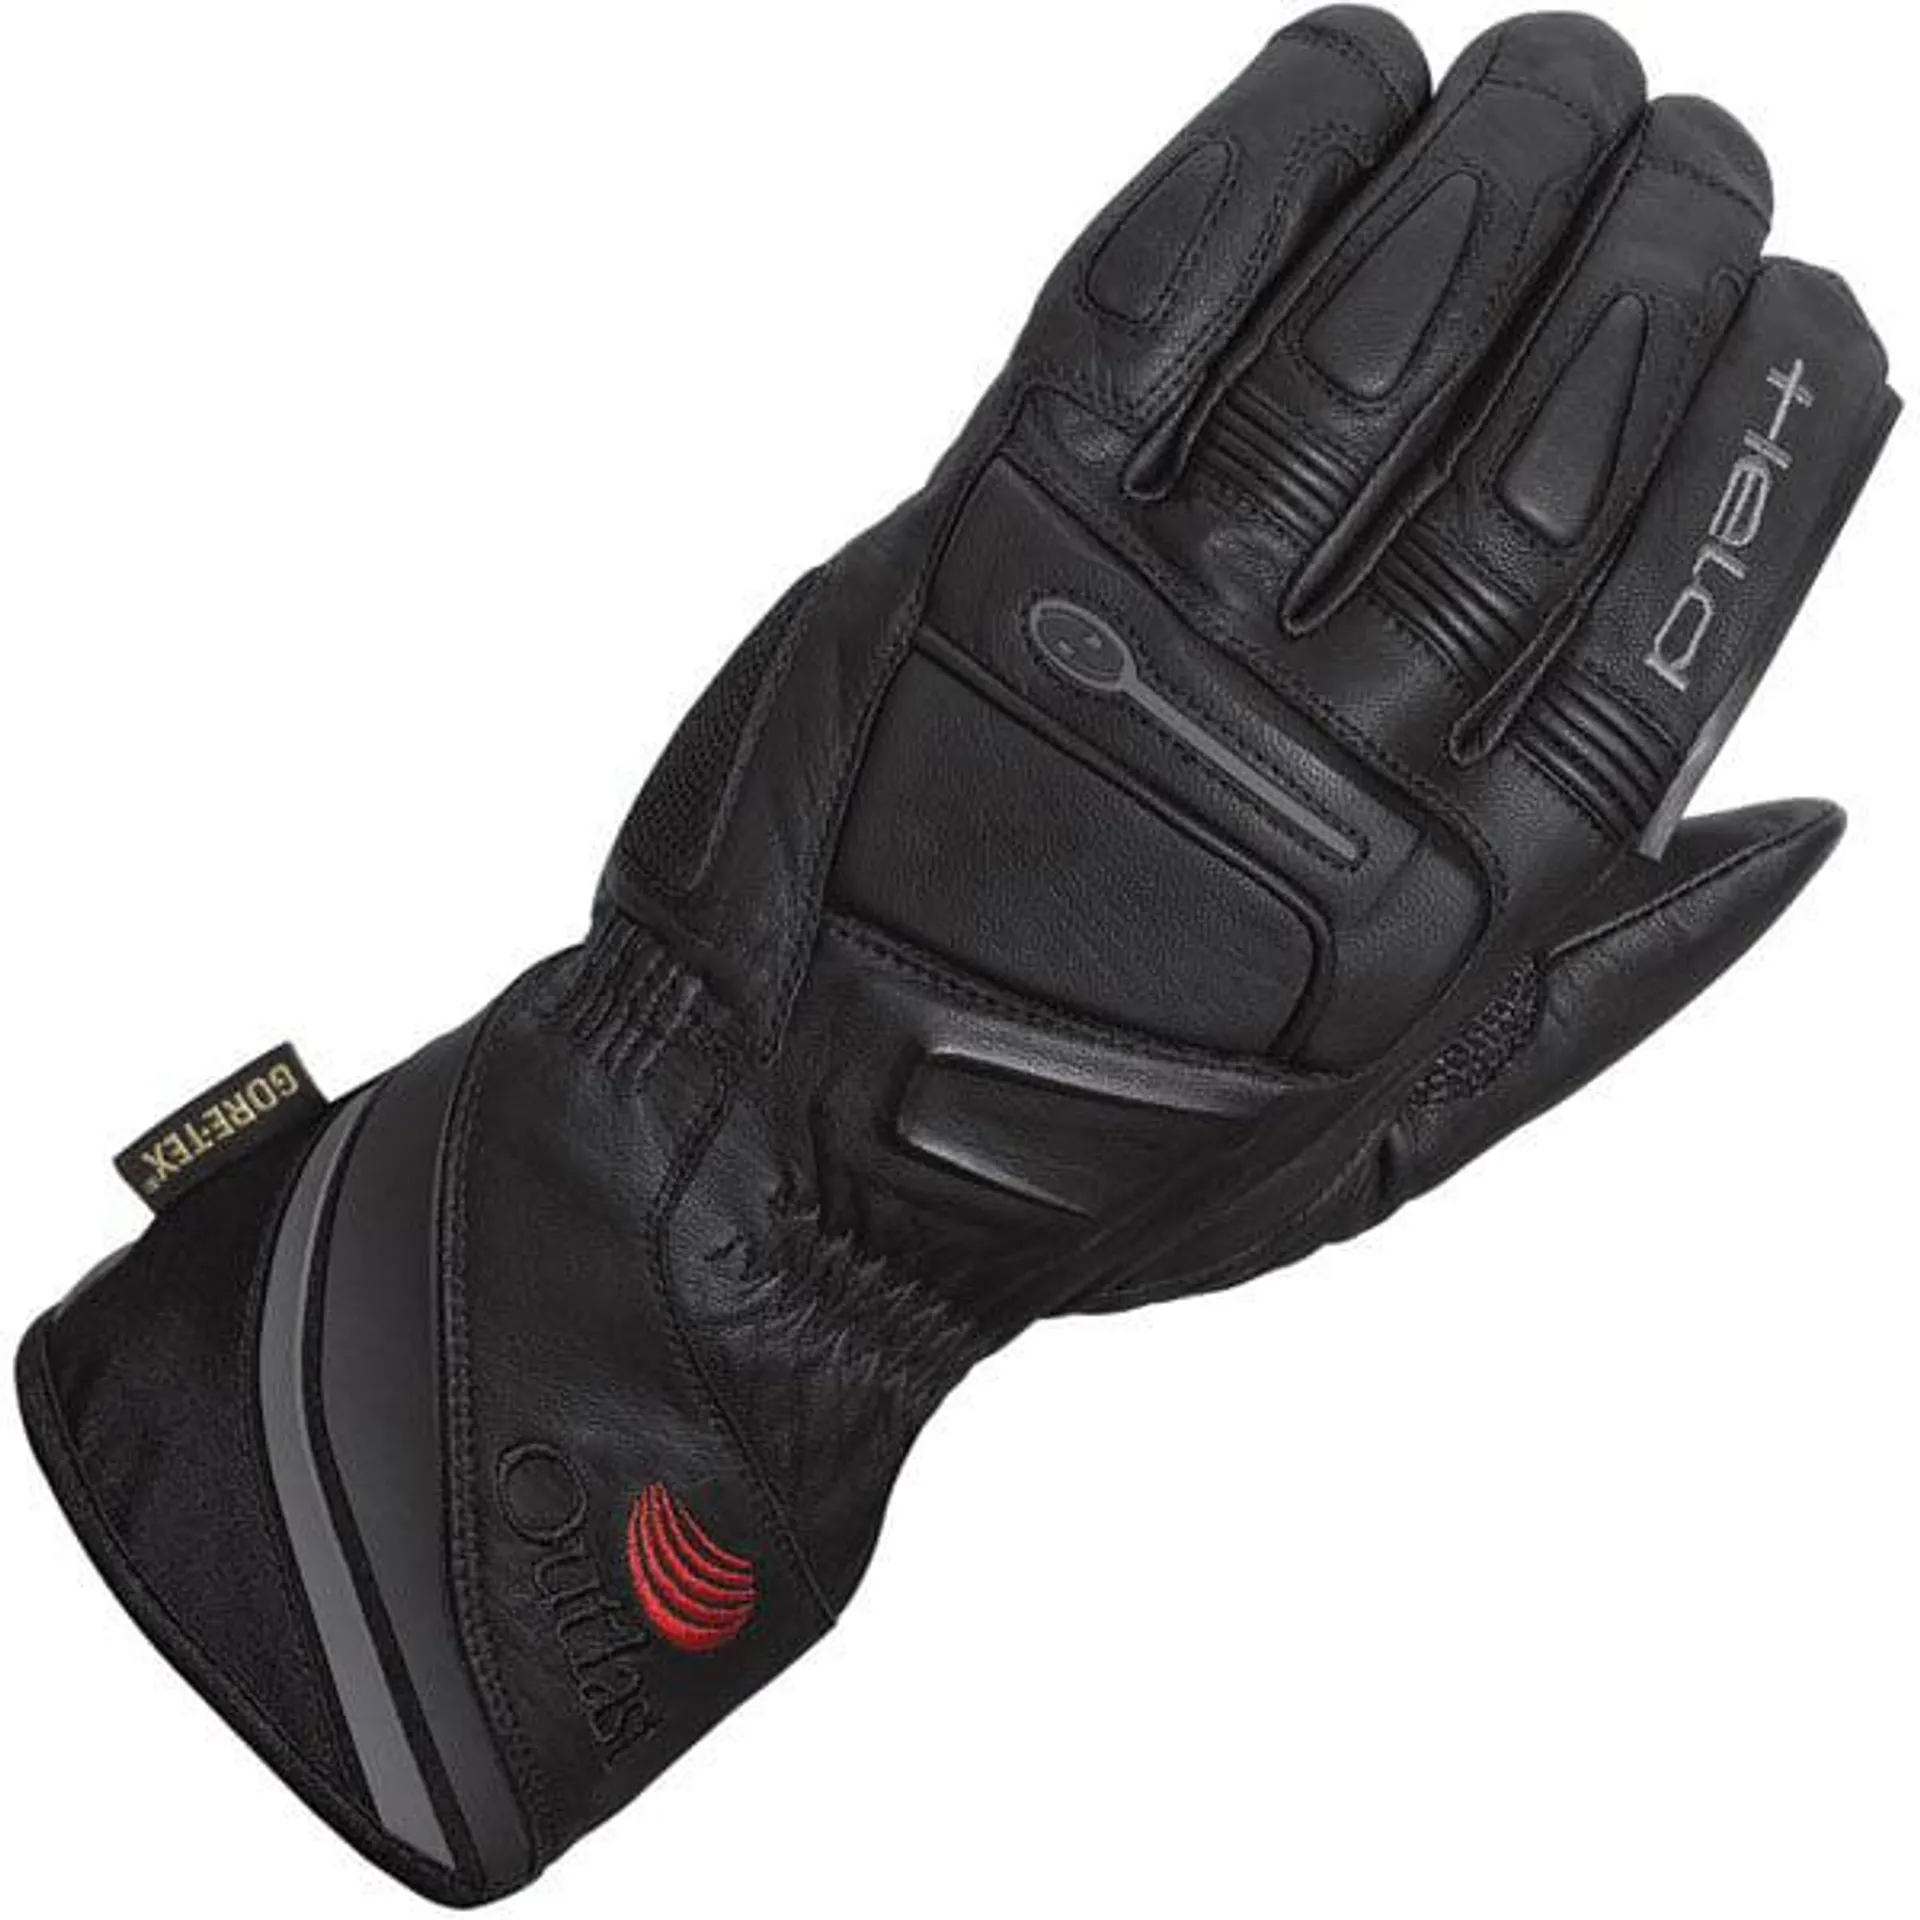 Held Season Gore-Tex Glove - Black